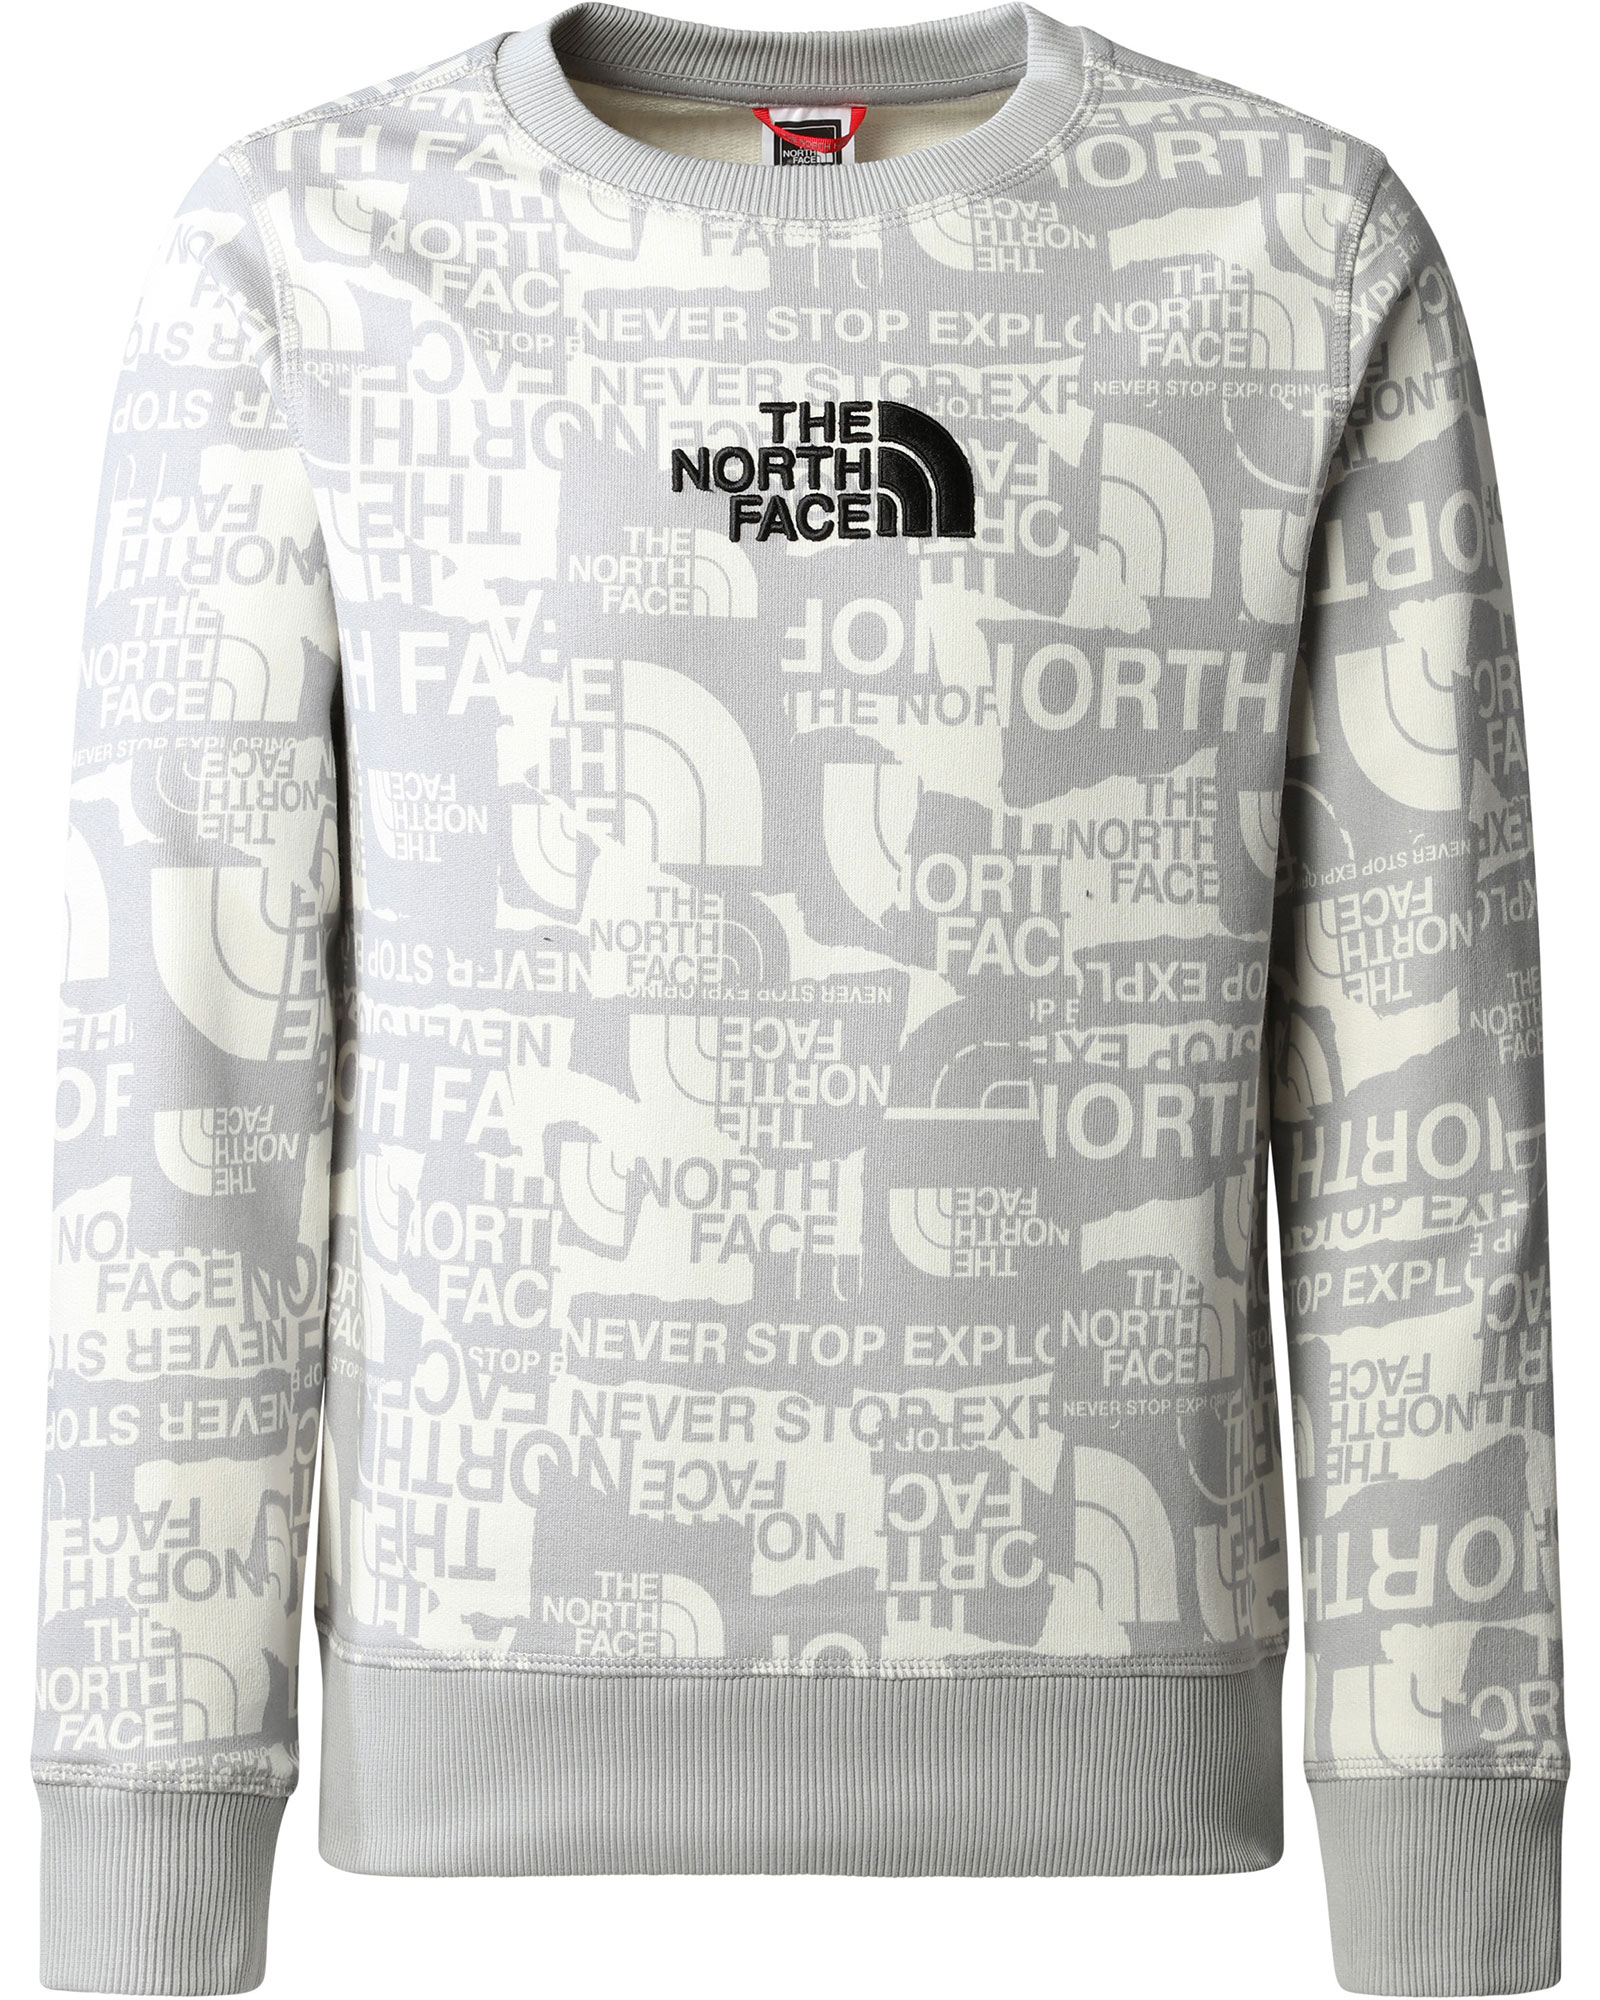 The North Face Boy’s Drew Peak Light Crew T Shirt - Meld Grey S